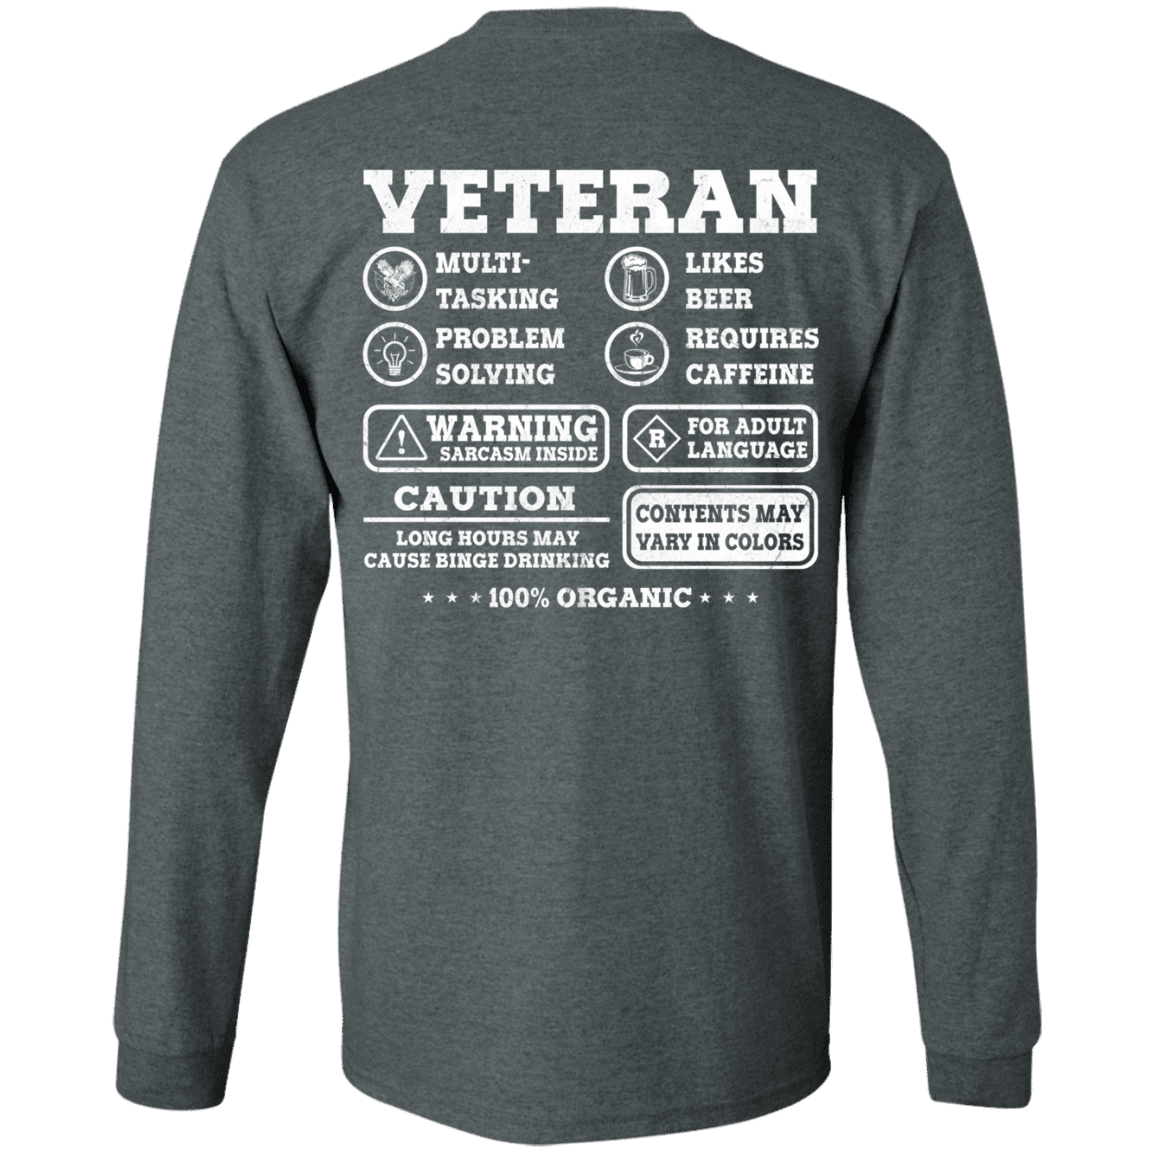 Military T-Shirt "Veteran Multitasking Sarcasm" Men Back-TShirt-General-Veterans Nation